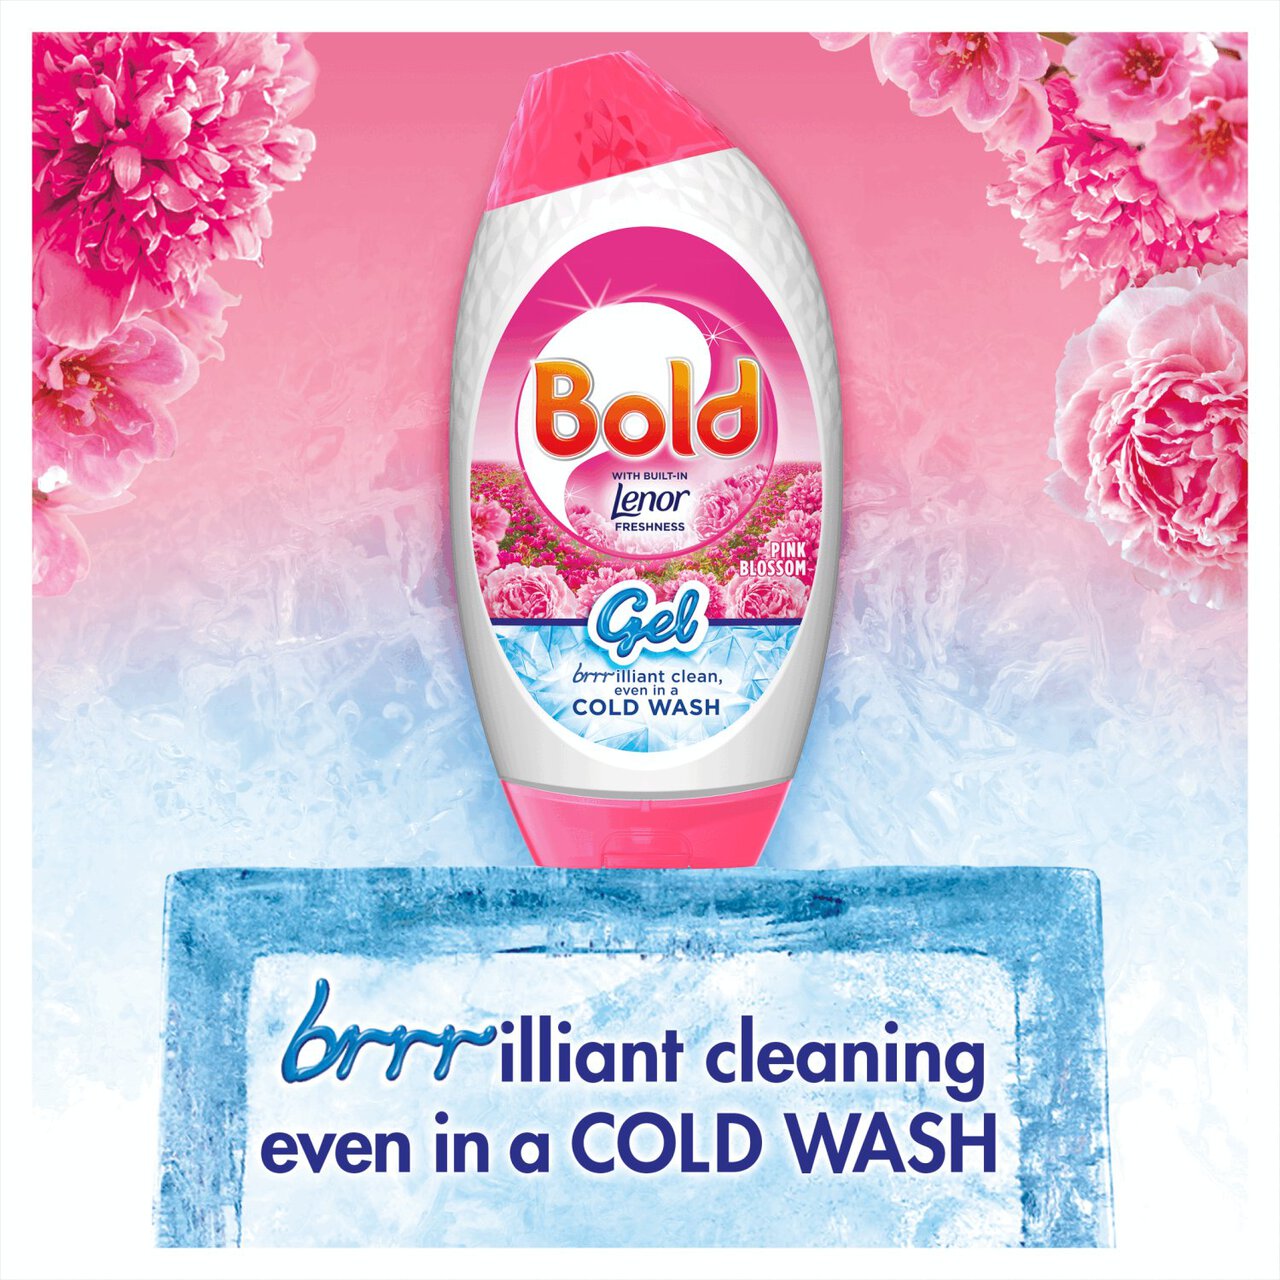 Bold 2in1 Washing Liquid Gel Pink Blossom 35 Washes 1225ml